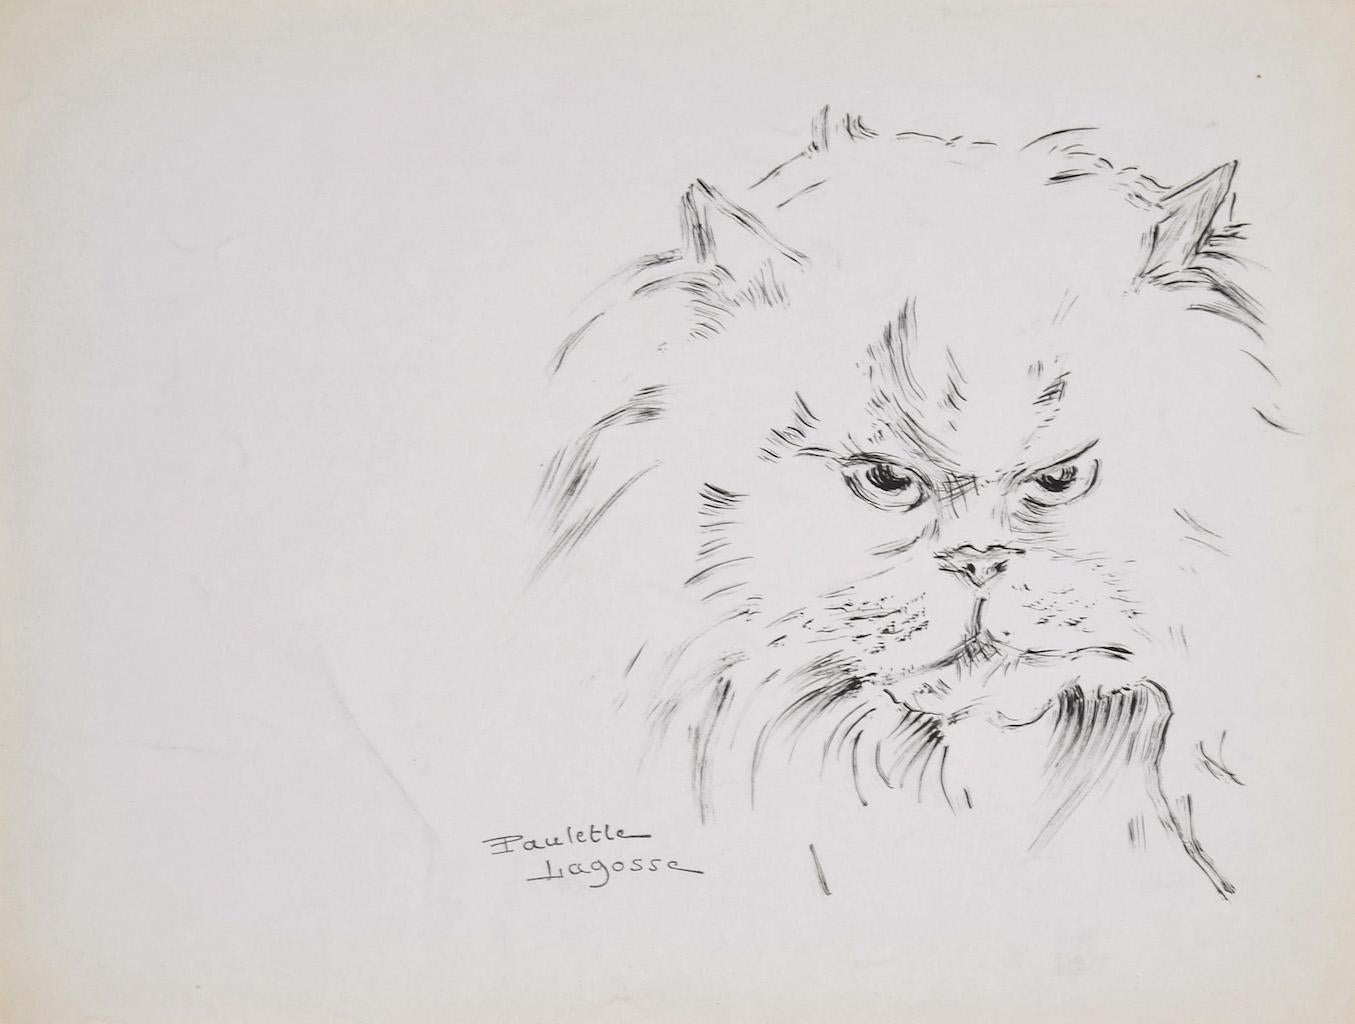 The Cat - Pen on Paper by Marie Paulette Lagosse - 1970s